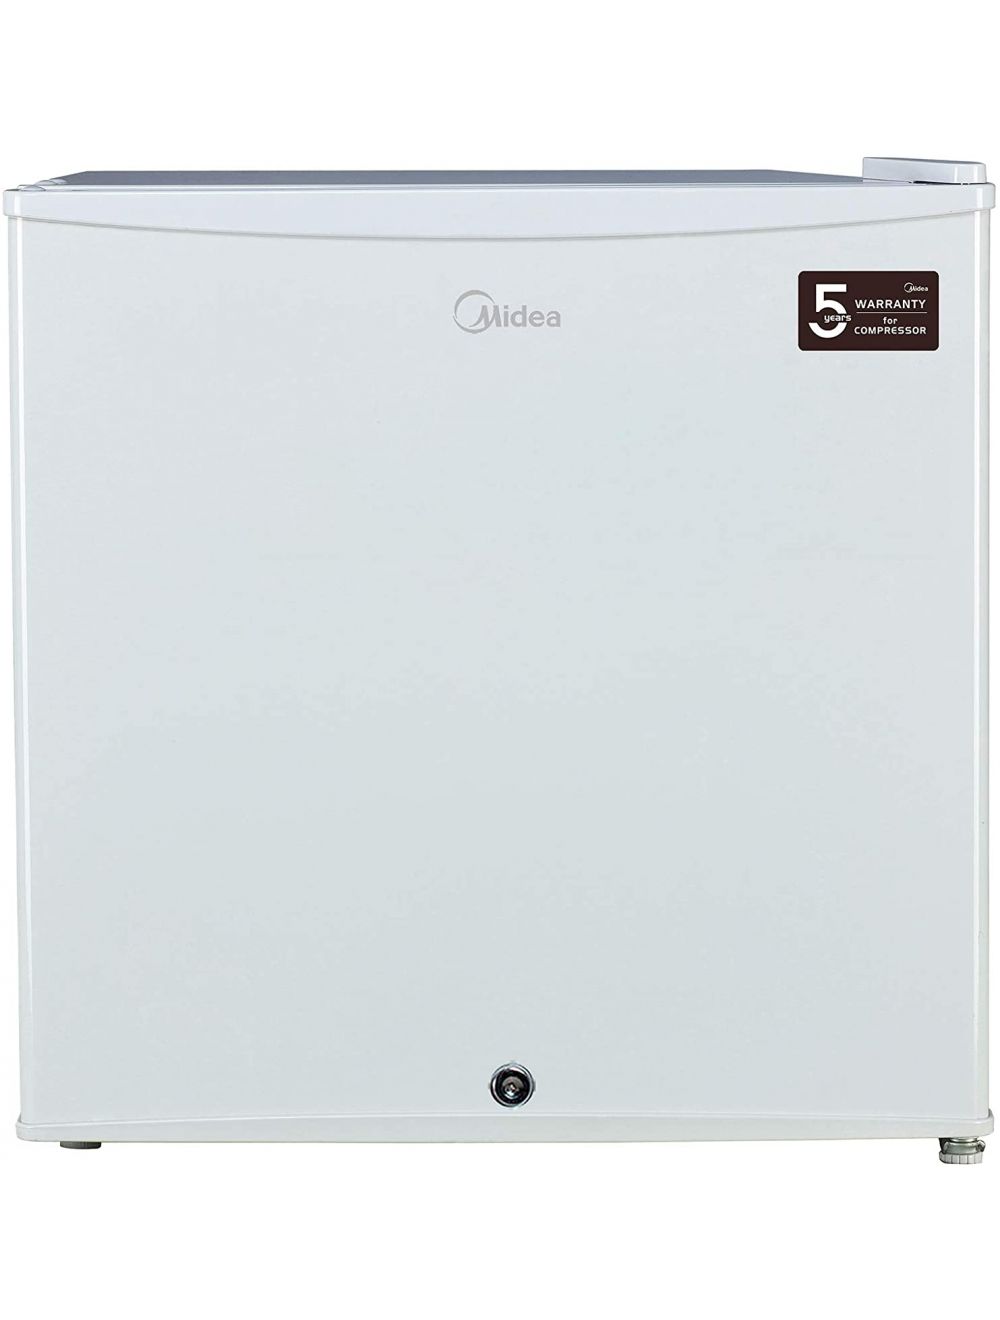 Midea Manual Defrost Single Door Refrigerator 65 L, White